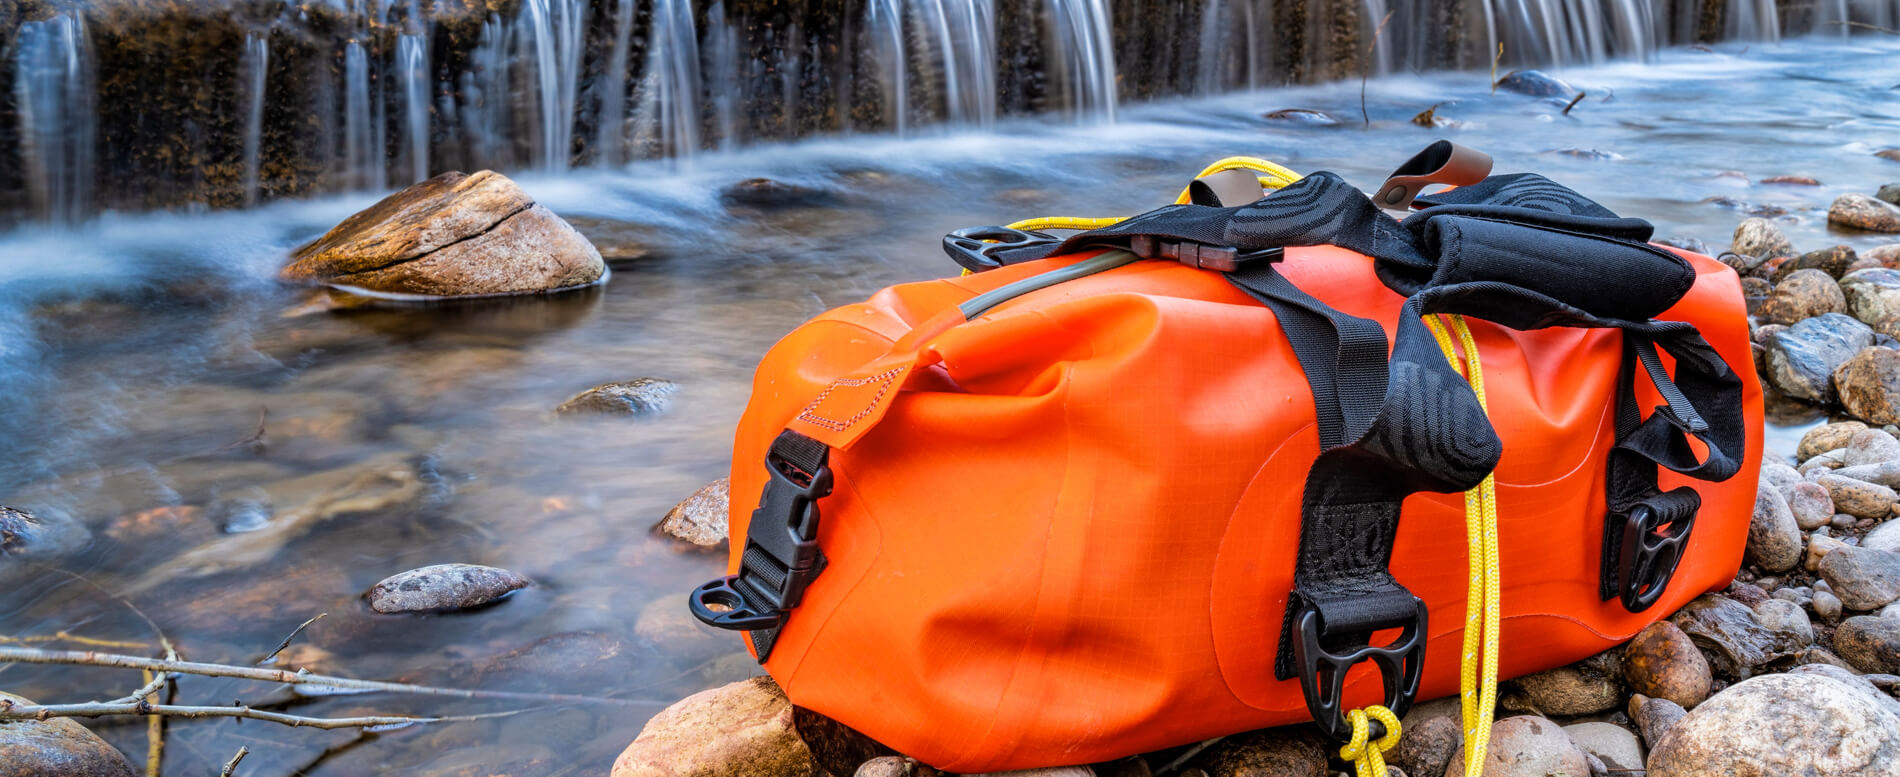 The 30 Best Waterproof Duffel Bags - GILI Sports